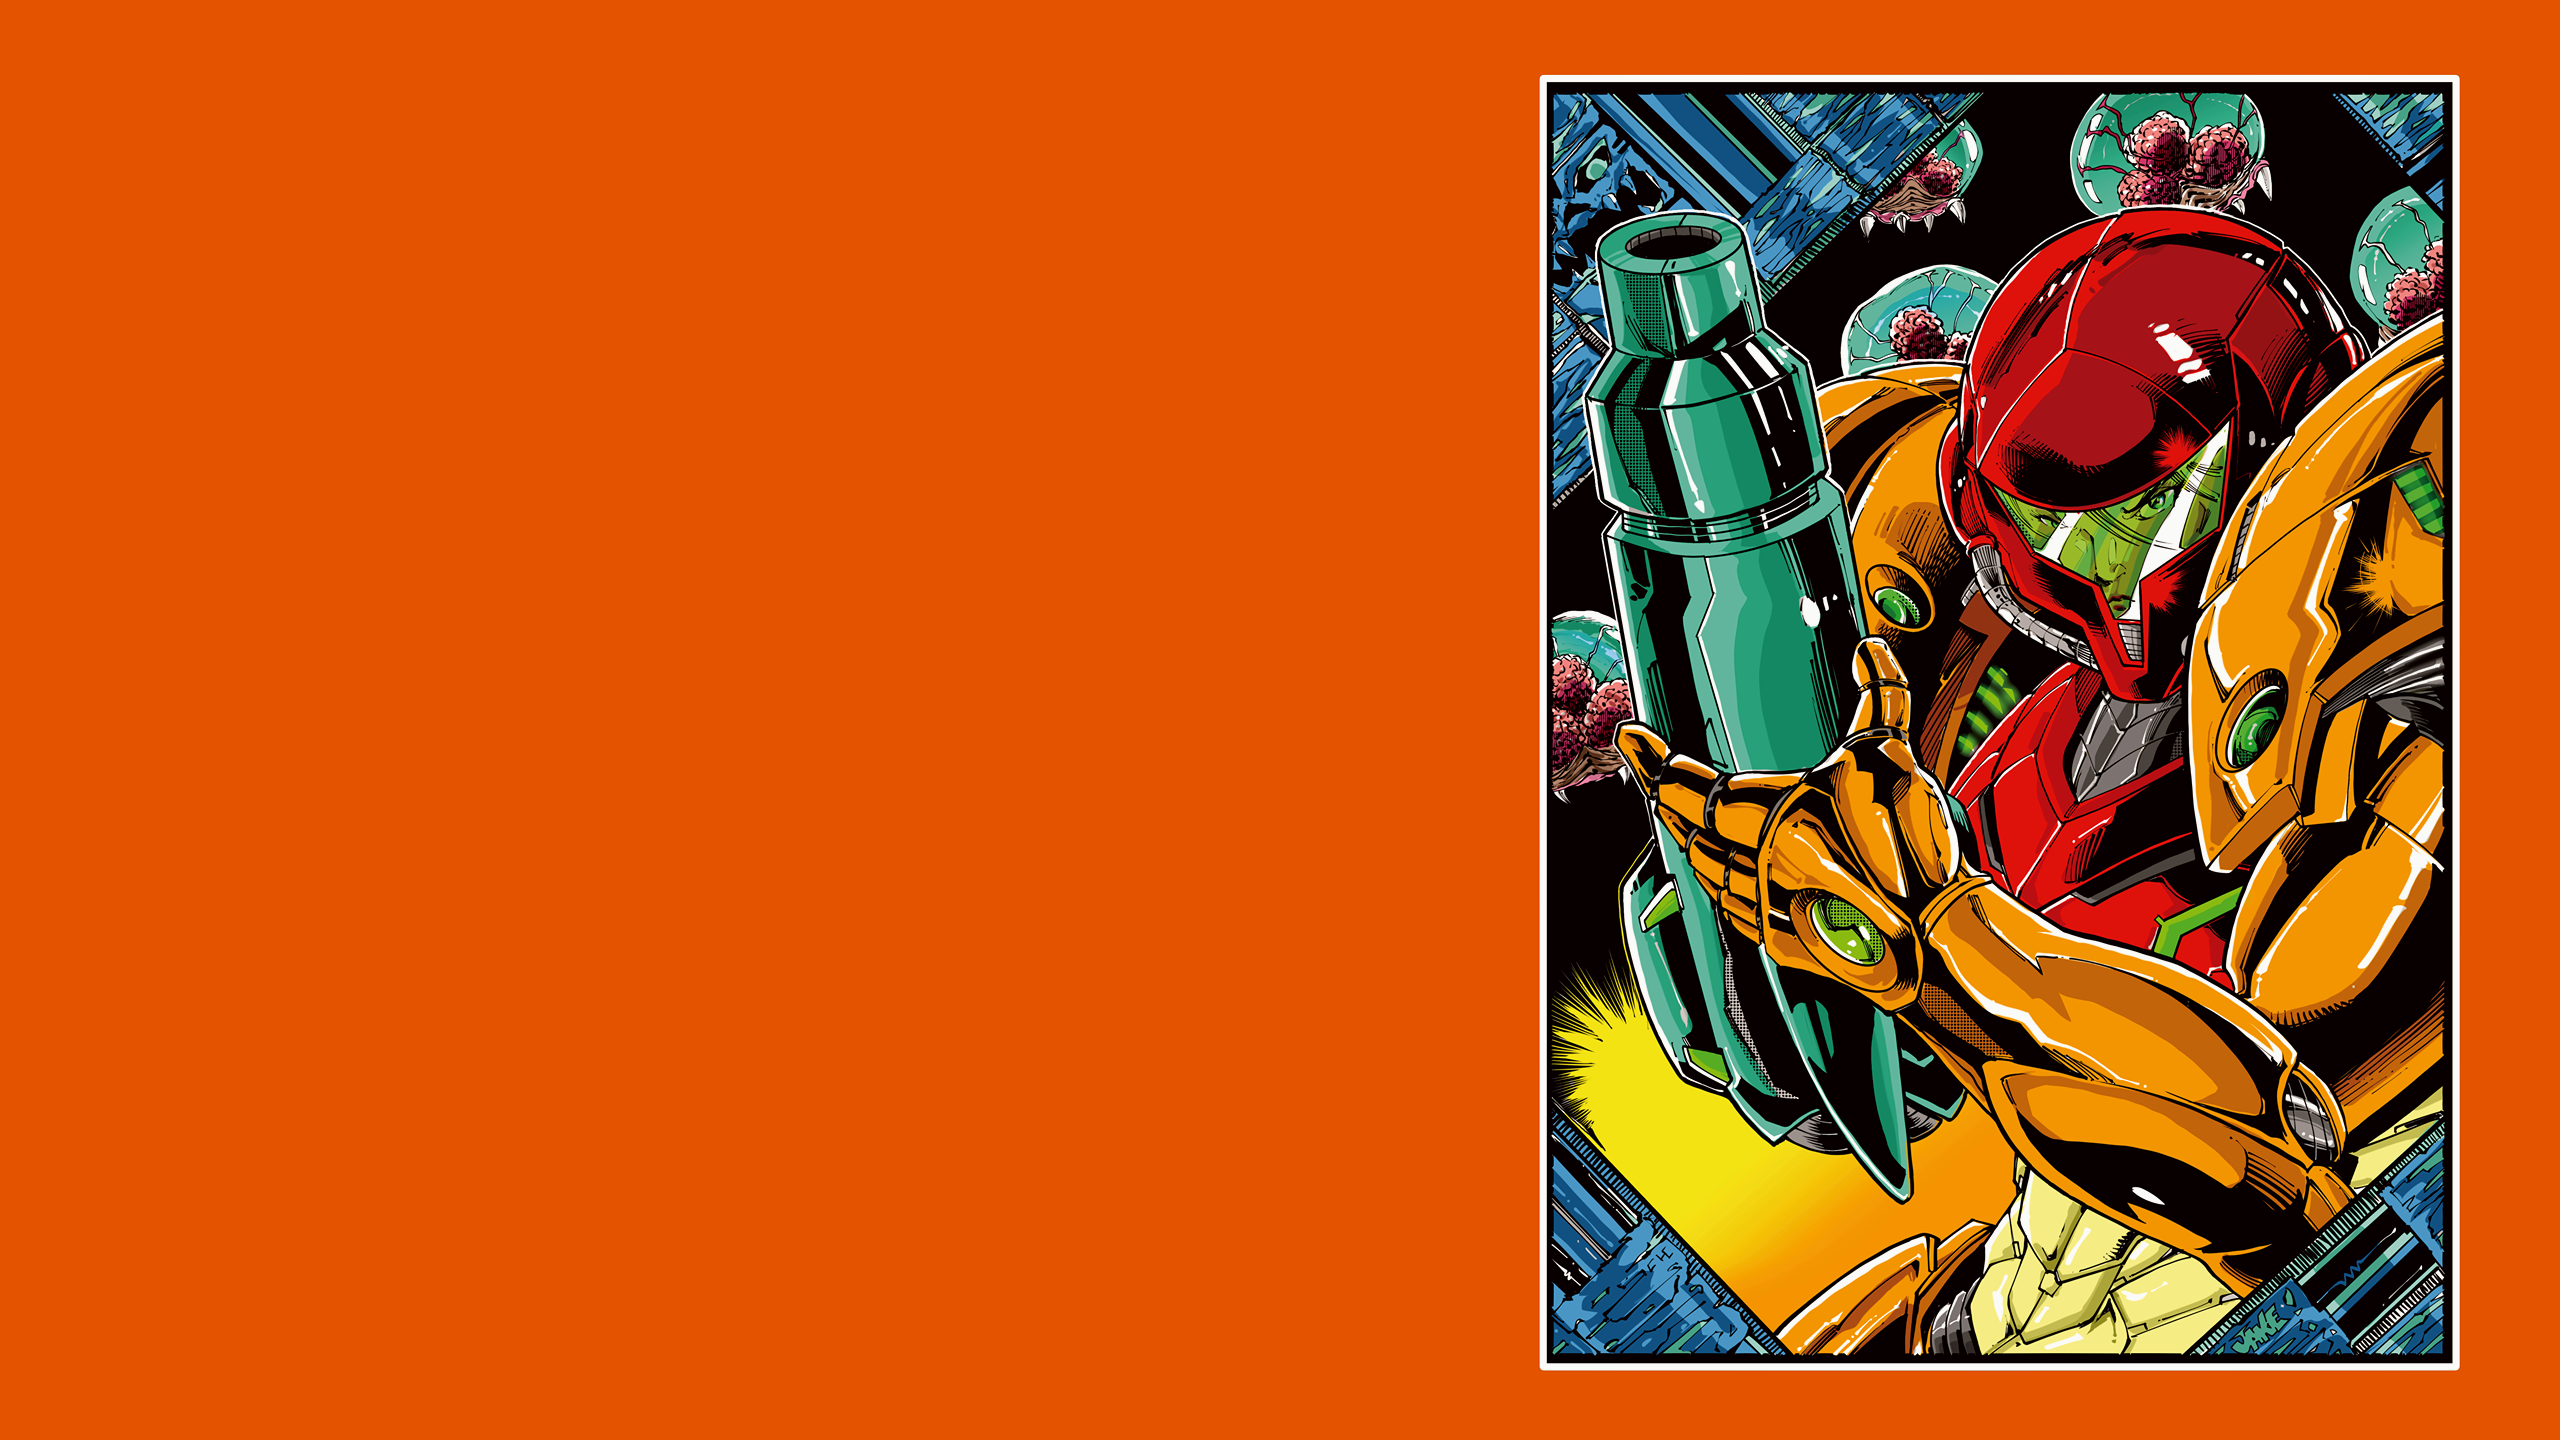 General 2560x1440 Metroid Samus Aran armor orange background simple background comics Nintendo video game girls retro games cannons weapon video games power suit helmet visors looking at viewer video game characters